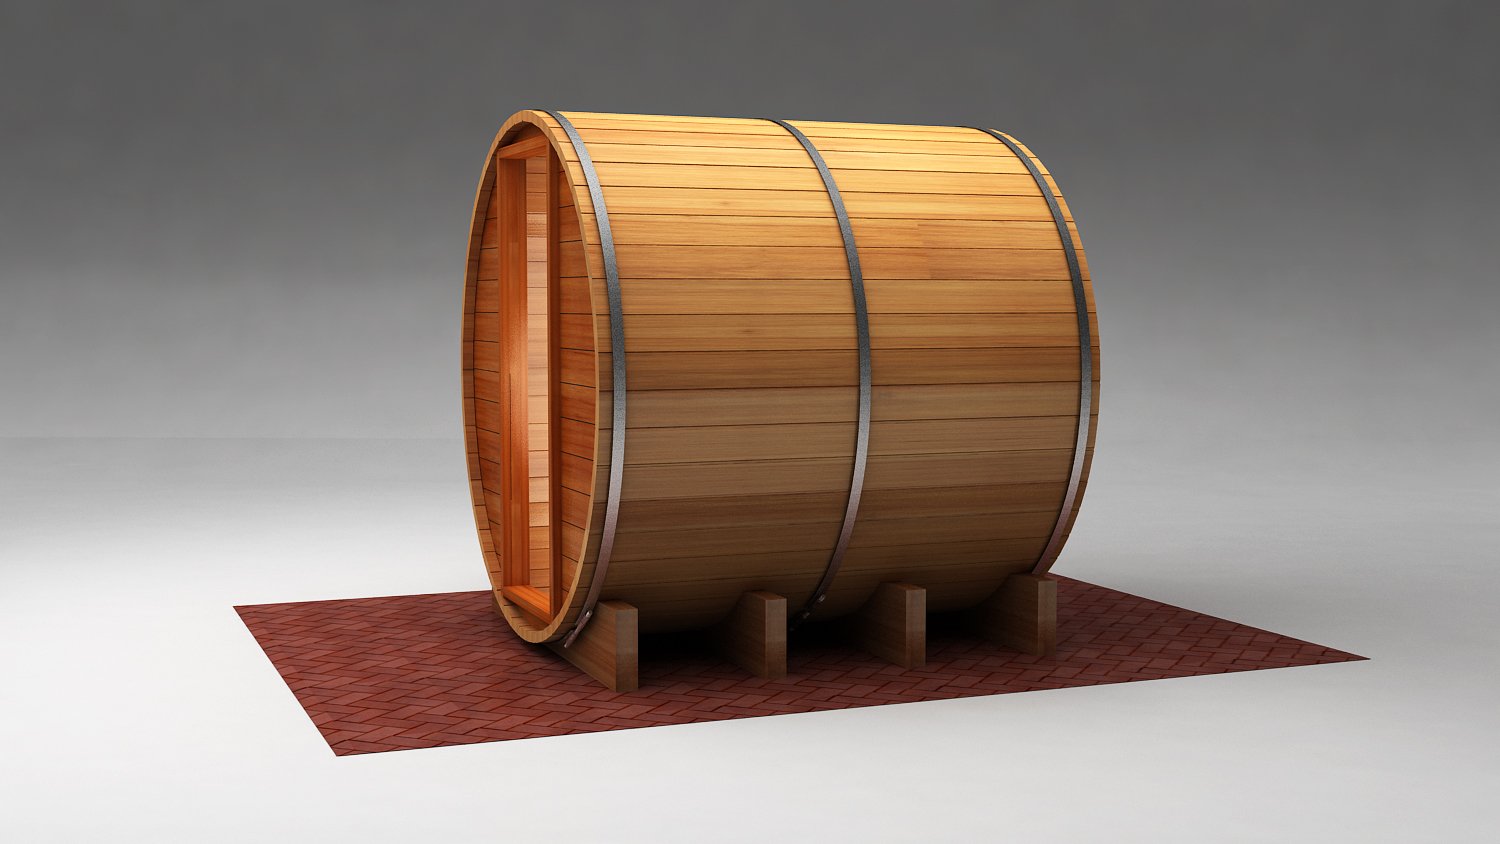 Barrel Sauna Kit - Outdoor Barrel Sauna Room 6' x 6' - Electric Heater